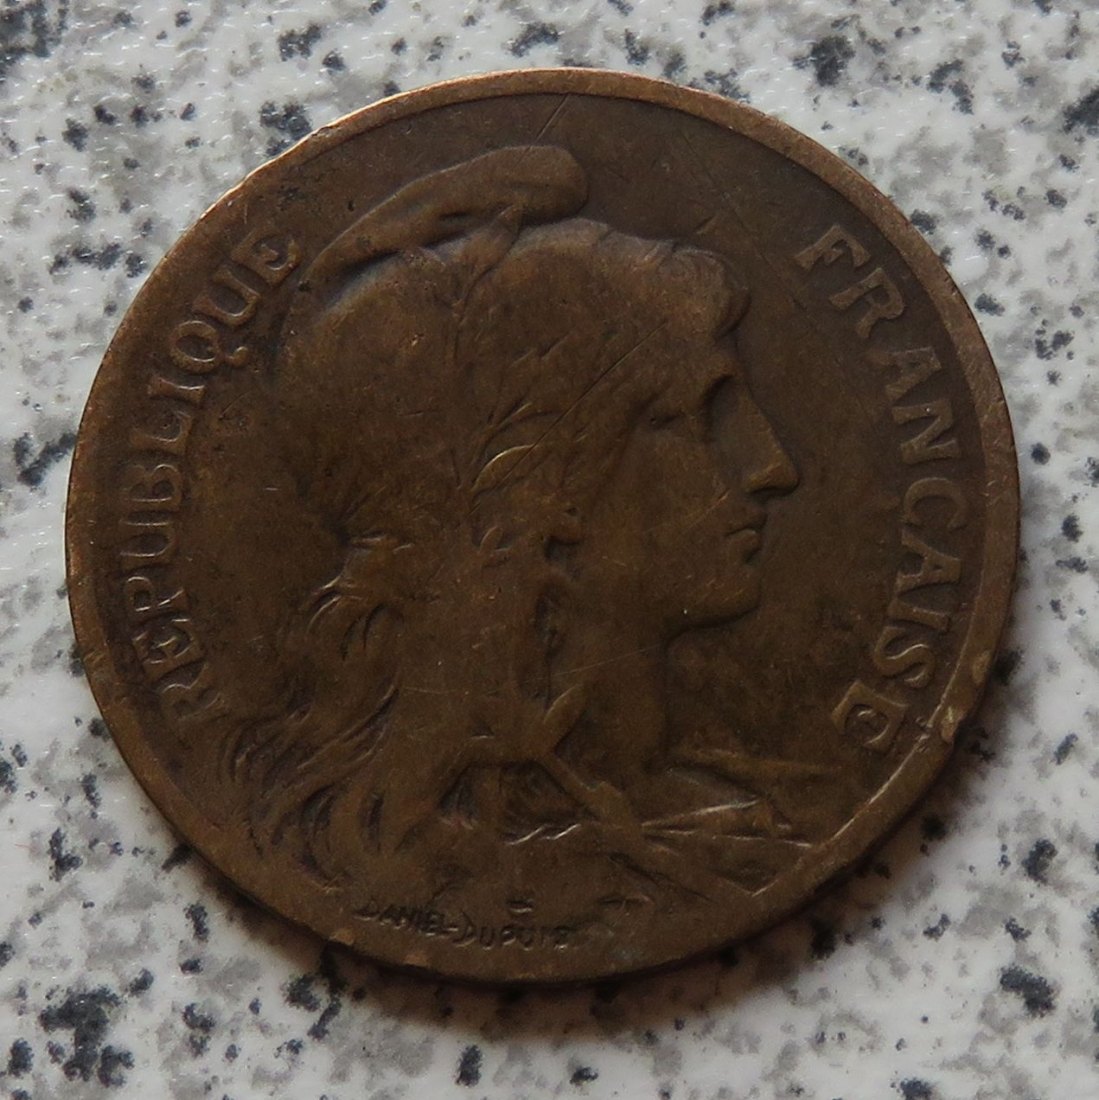  Frankreich 5 Centimes 1901   